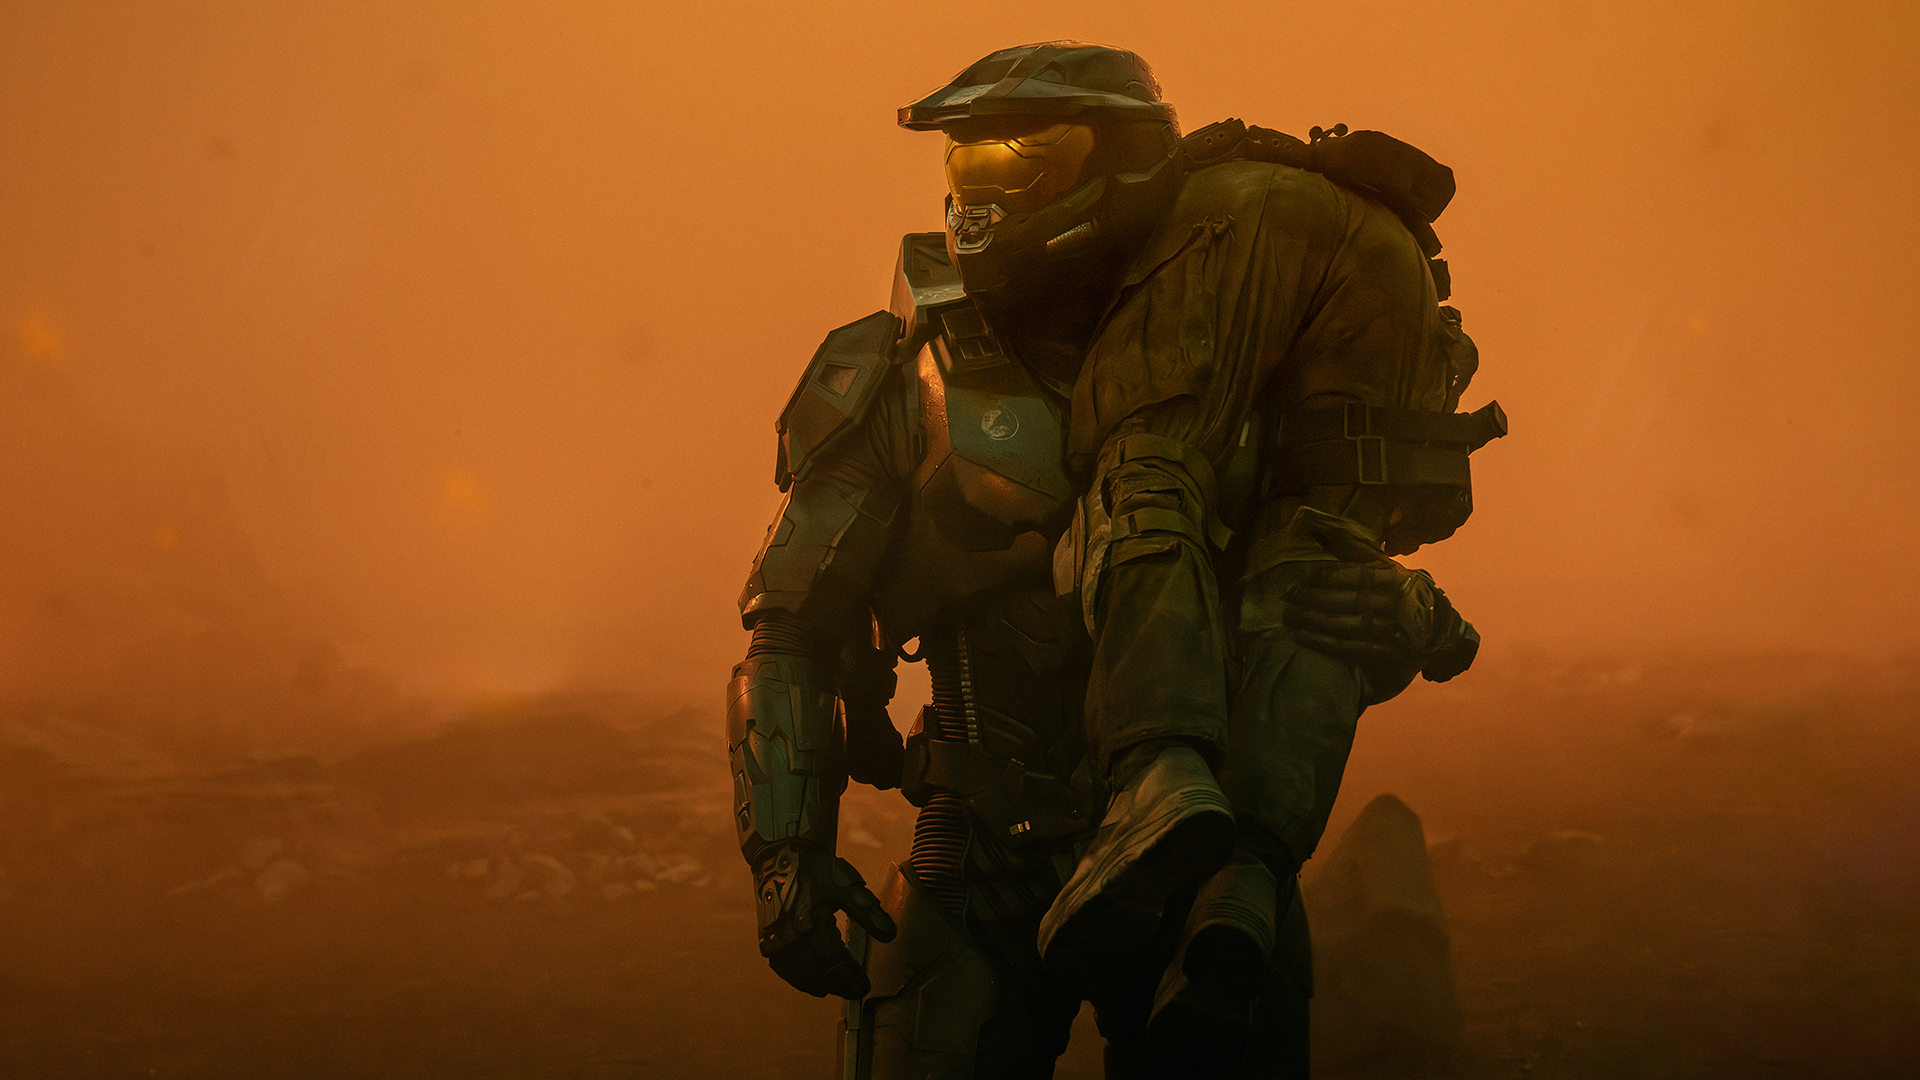 Halo Season 2 Teaser Trailer (HD) Paramount+ series 